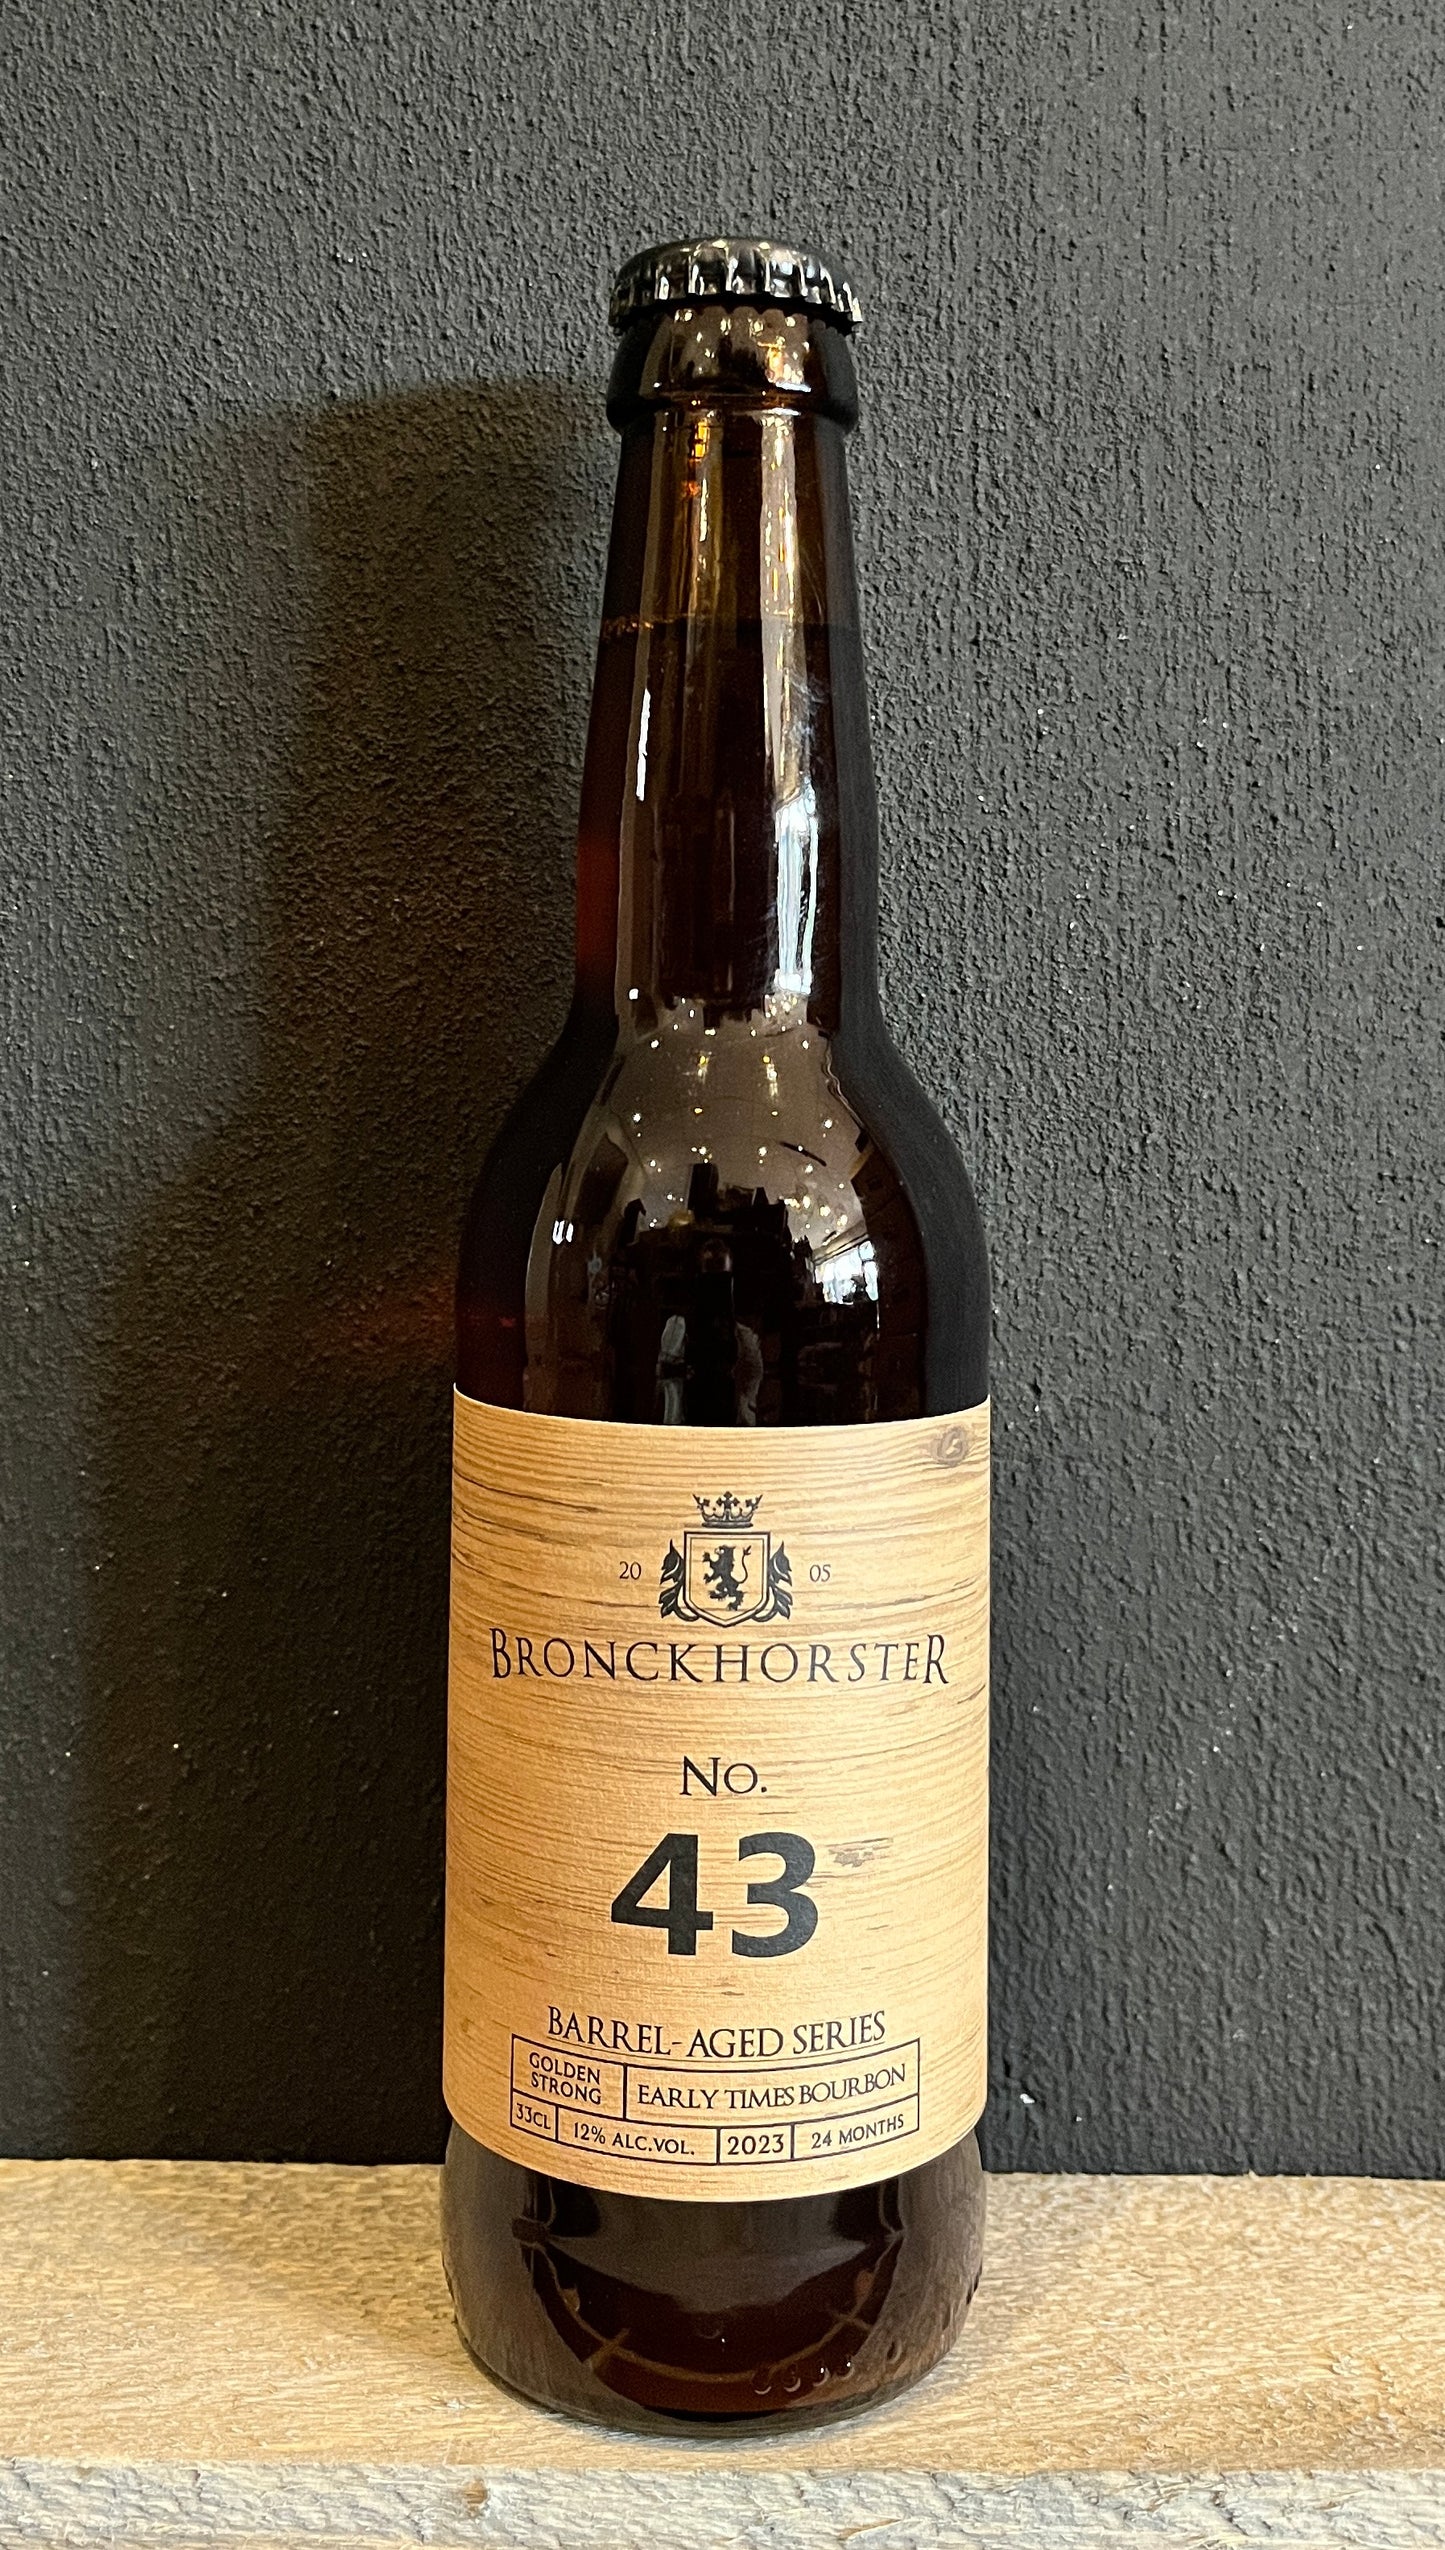 Bronckhorster Brewing Company - Barrel Aged Serie No. 43